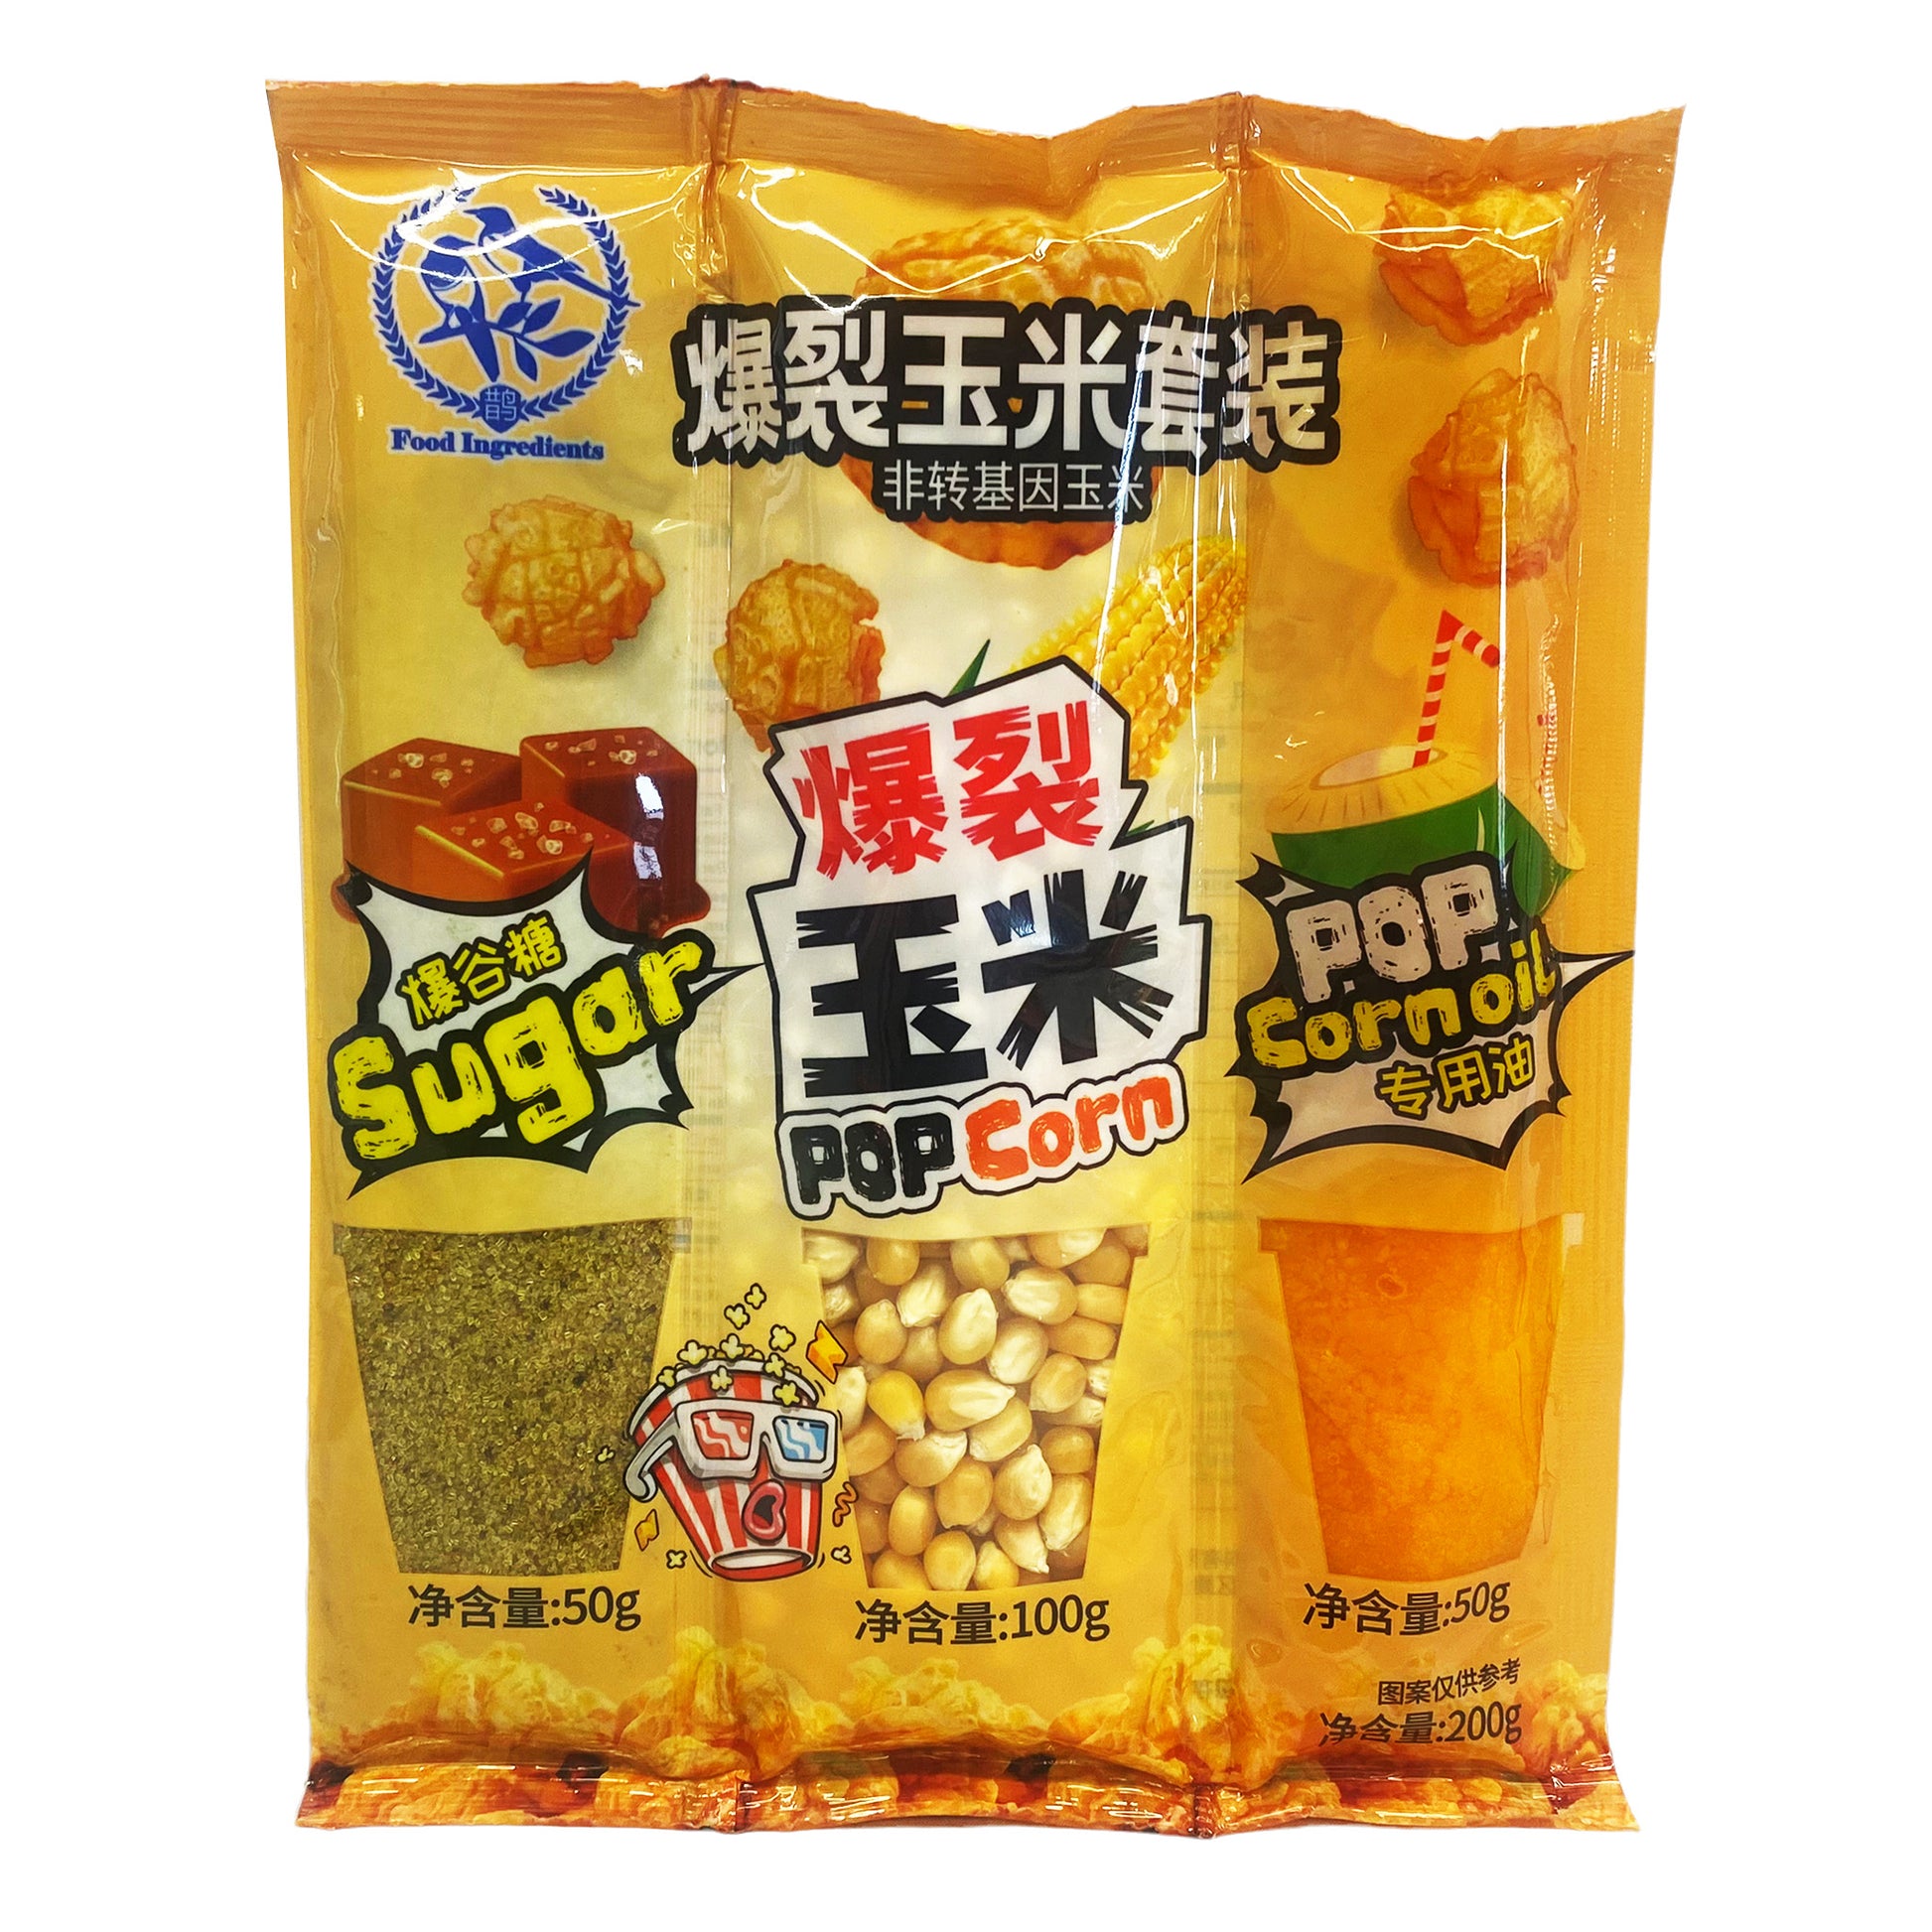 Front graphic image of Food Ingredients Popcorn Kit - Caramel Flavor 7.05oz (200g) - 鹊牌 爆裂玉米花套装 - 焦糖味 7.05oz (200g)